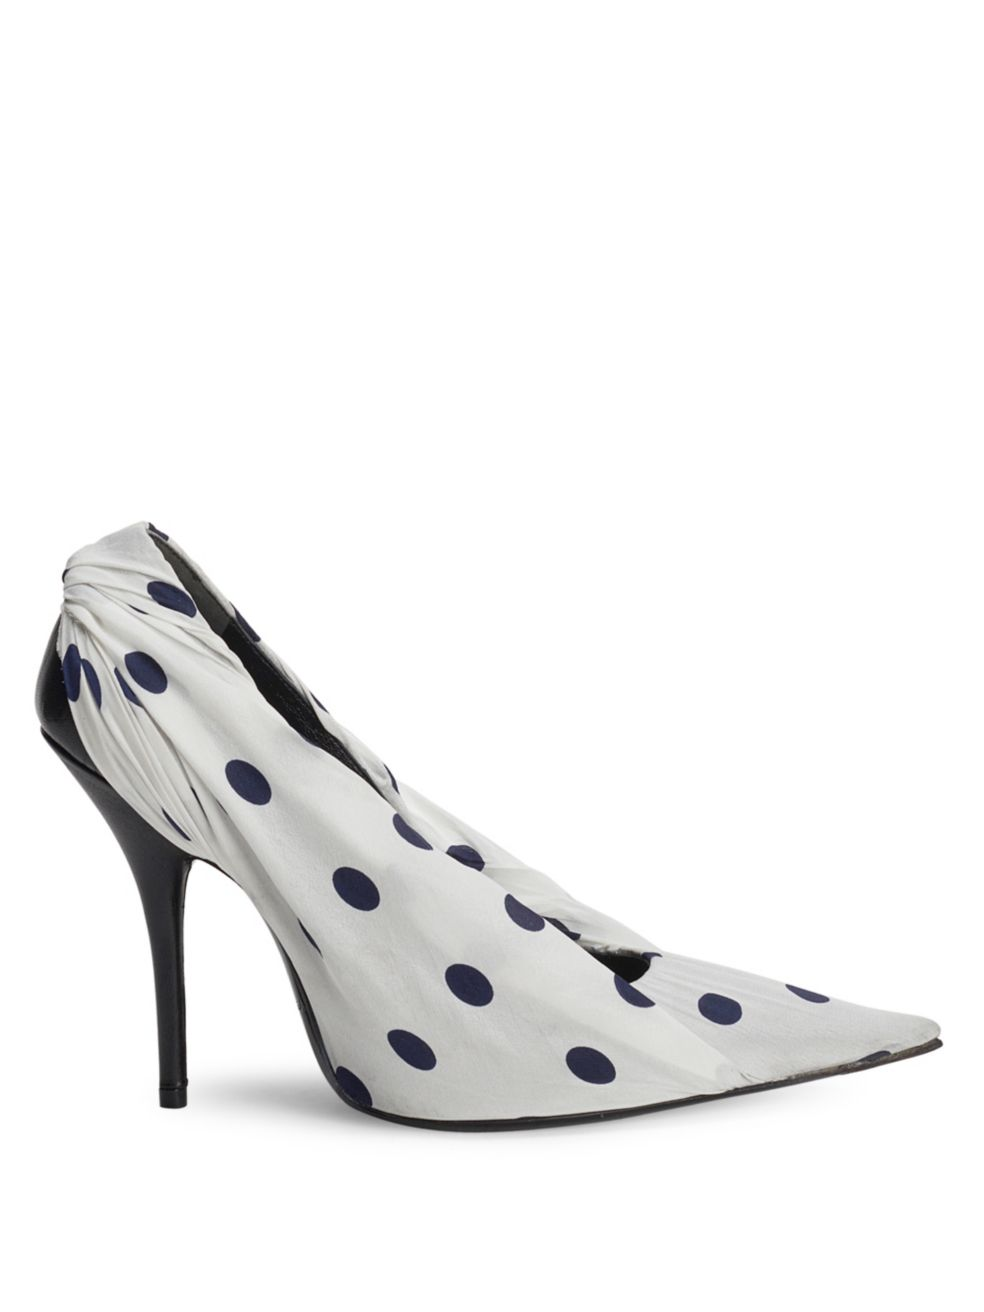 Balenciaga high heel polka dot shoes